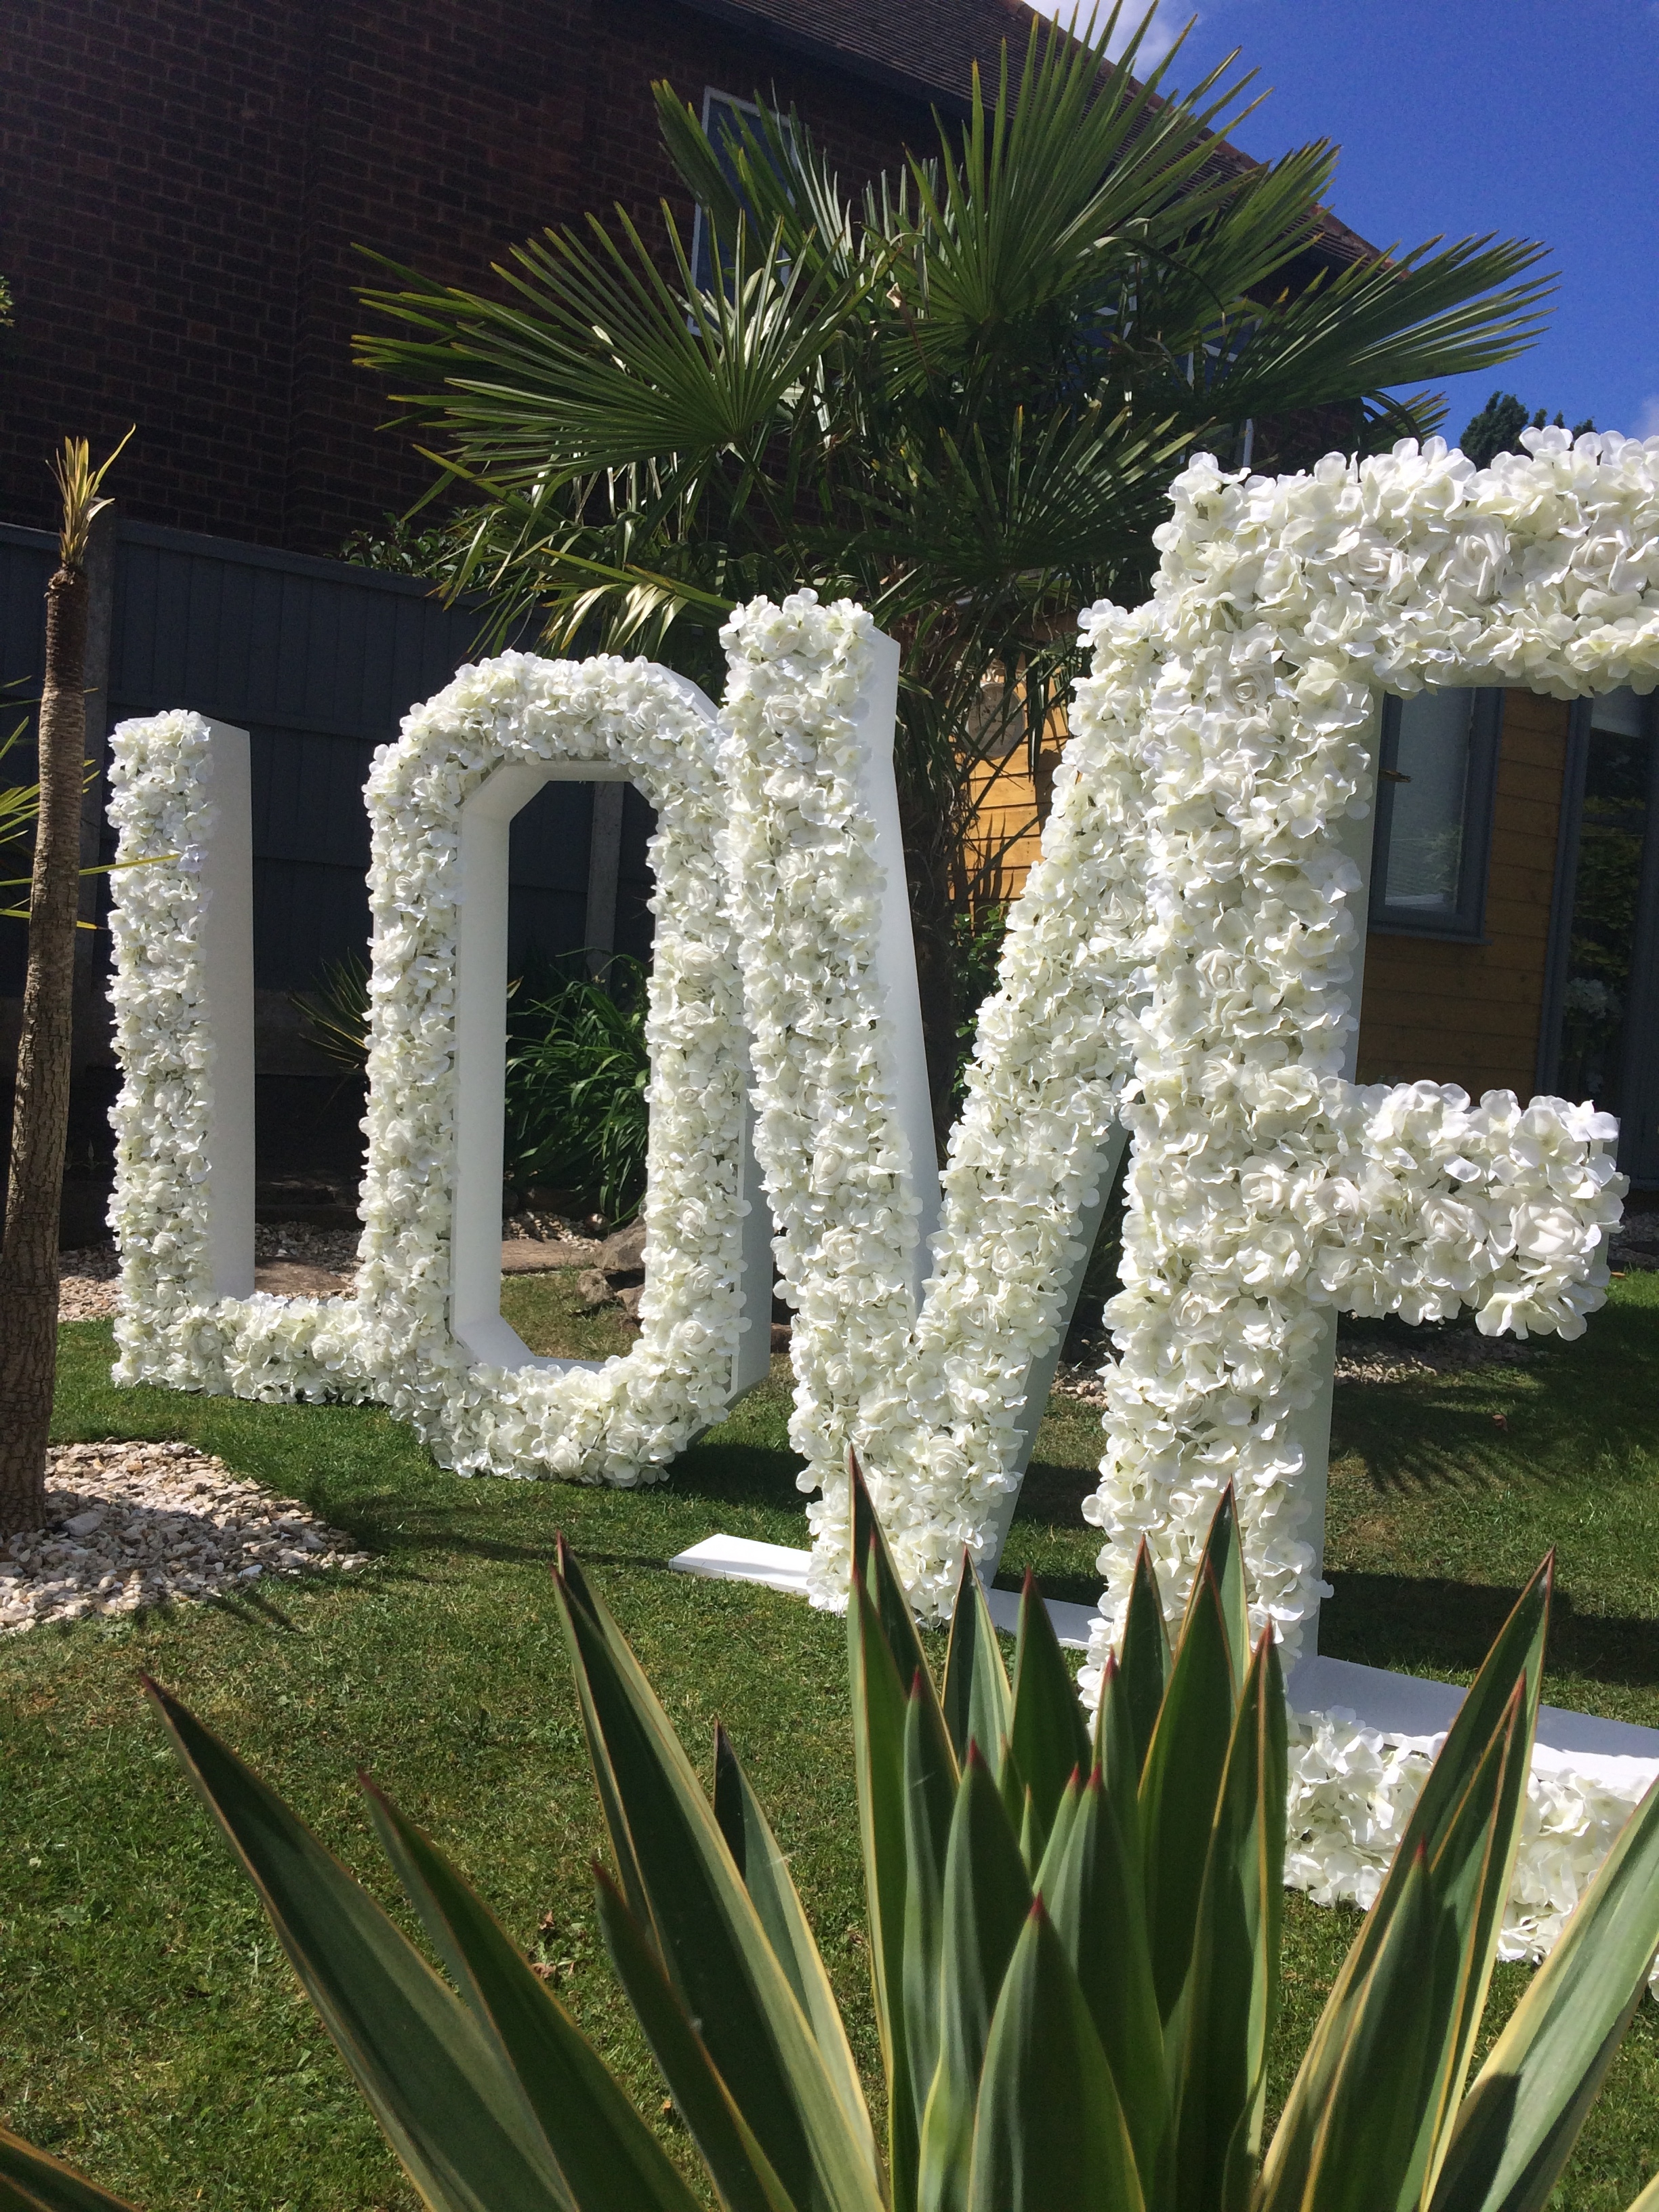 Giant L.E.D flower love letters